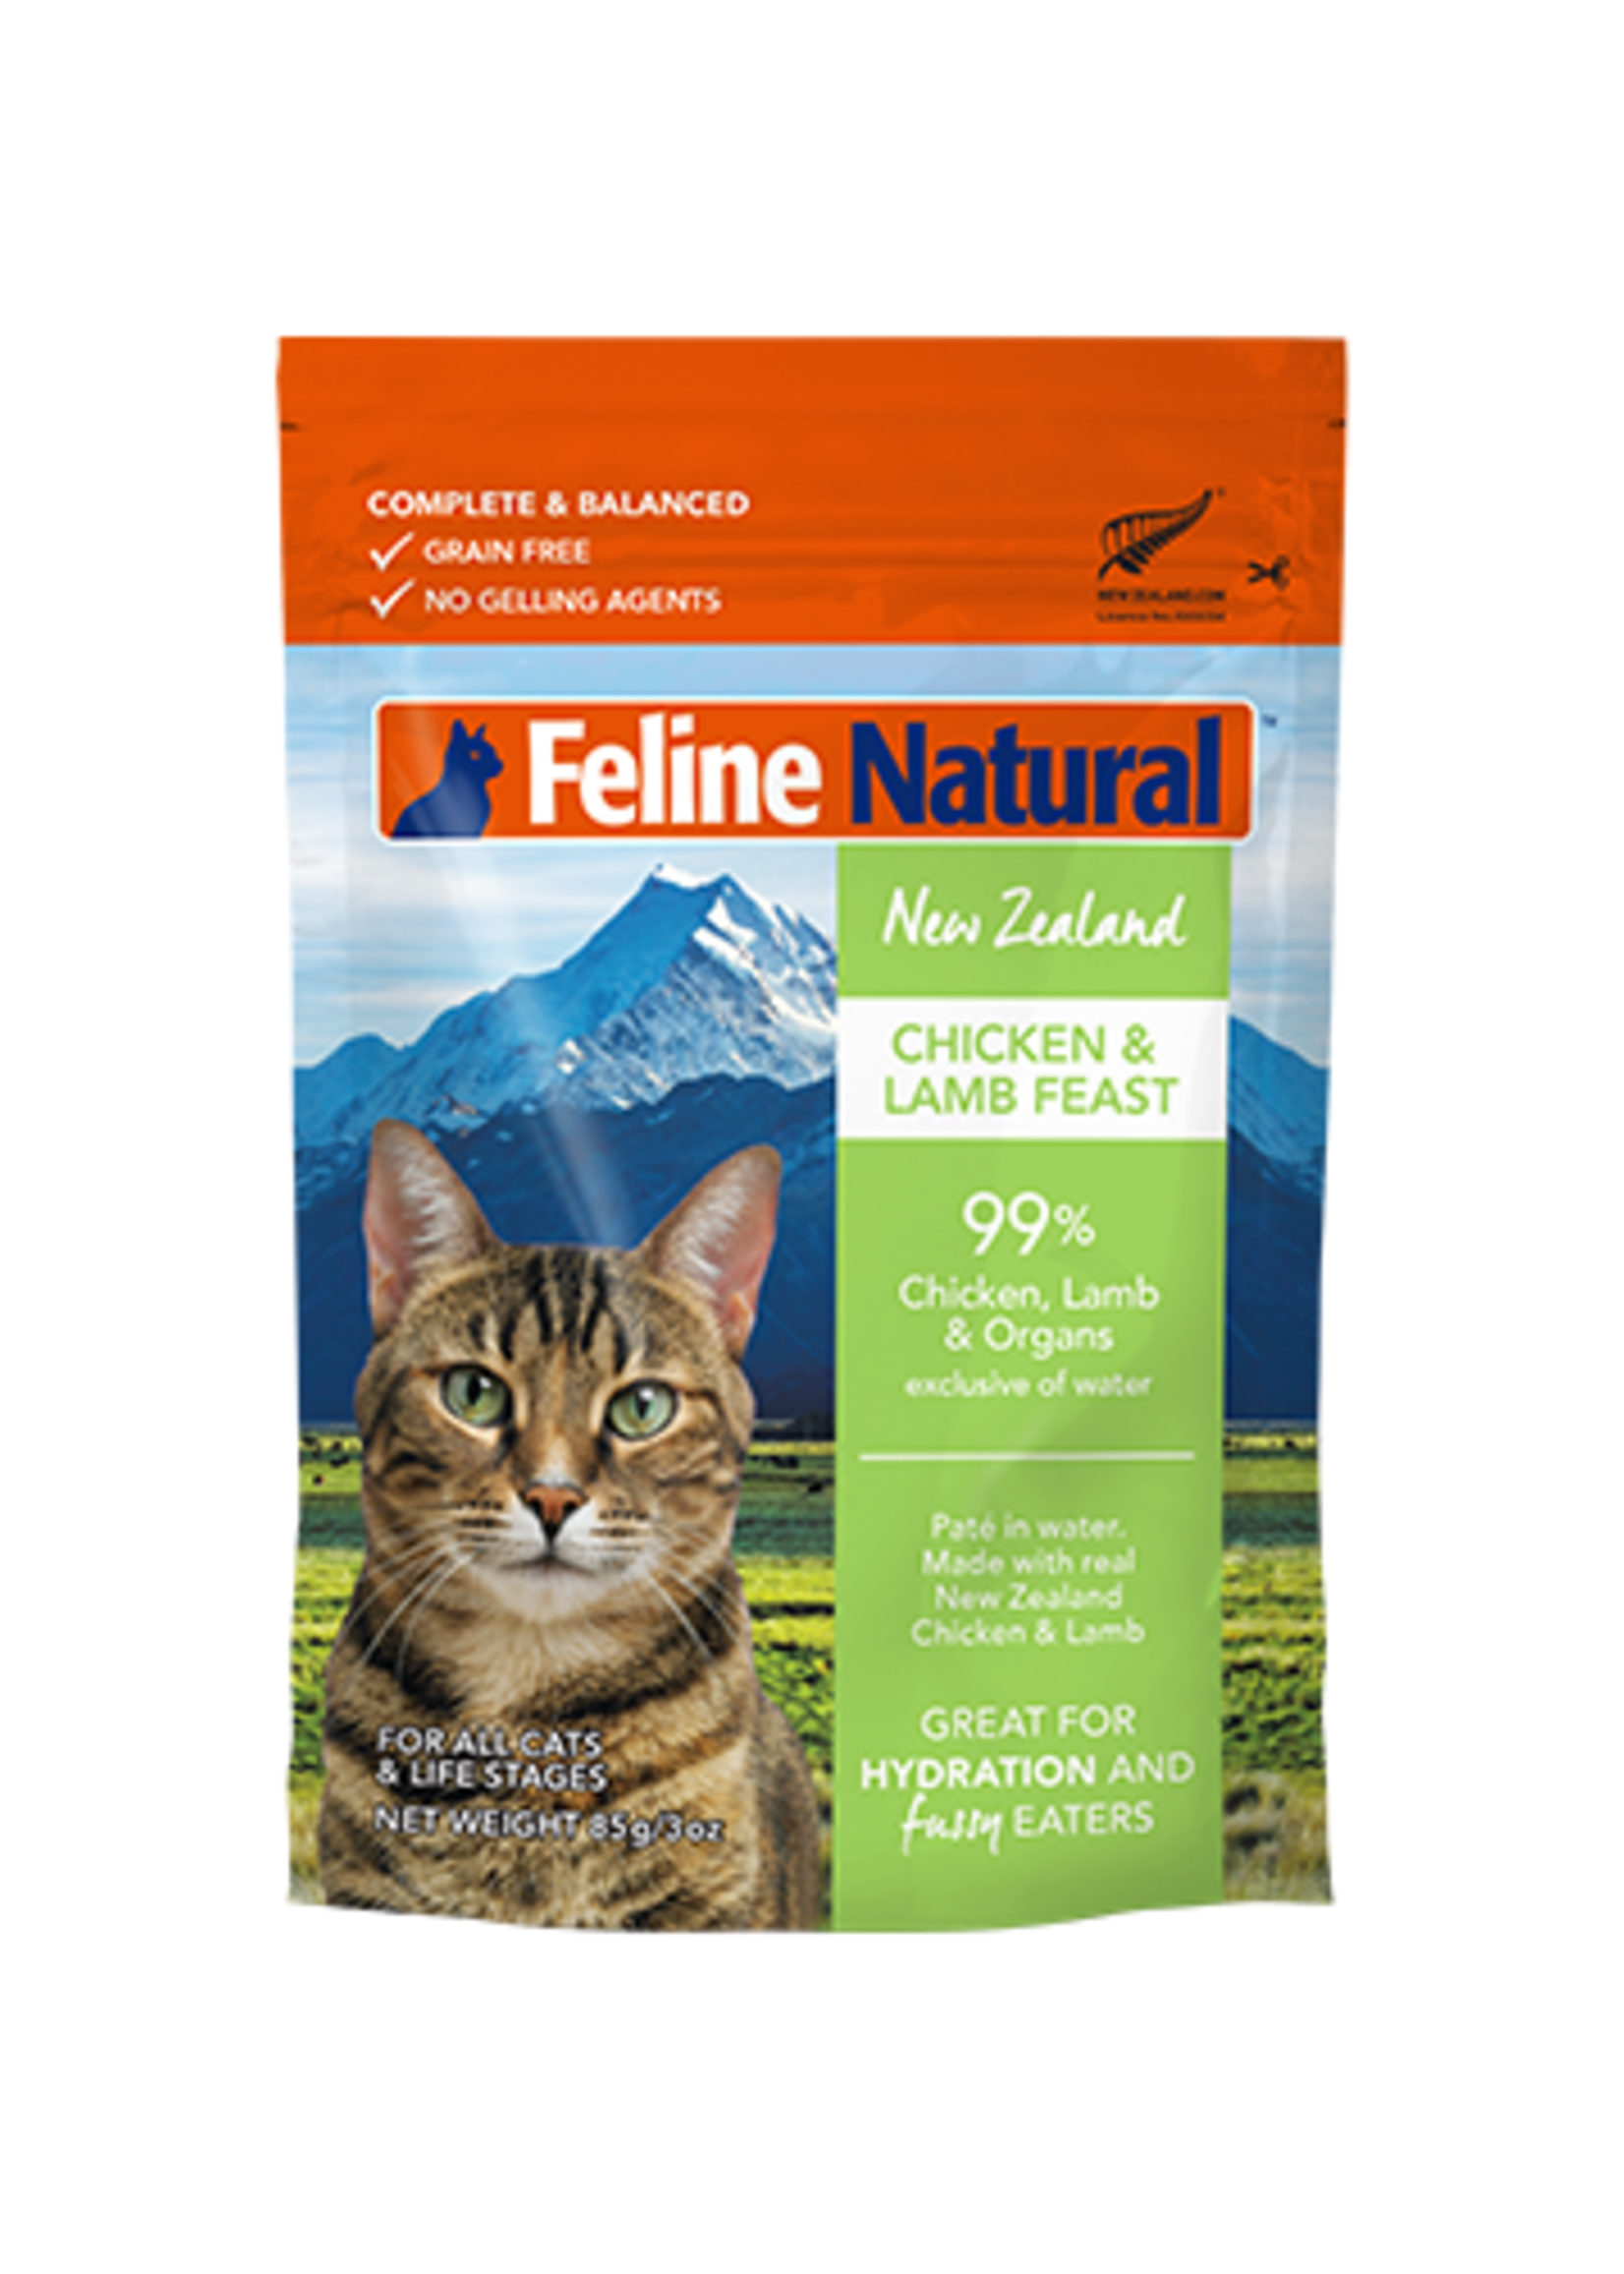 Feline Natural Feline Natural - New Zealand Chicken and Lamb feast 3oz